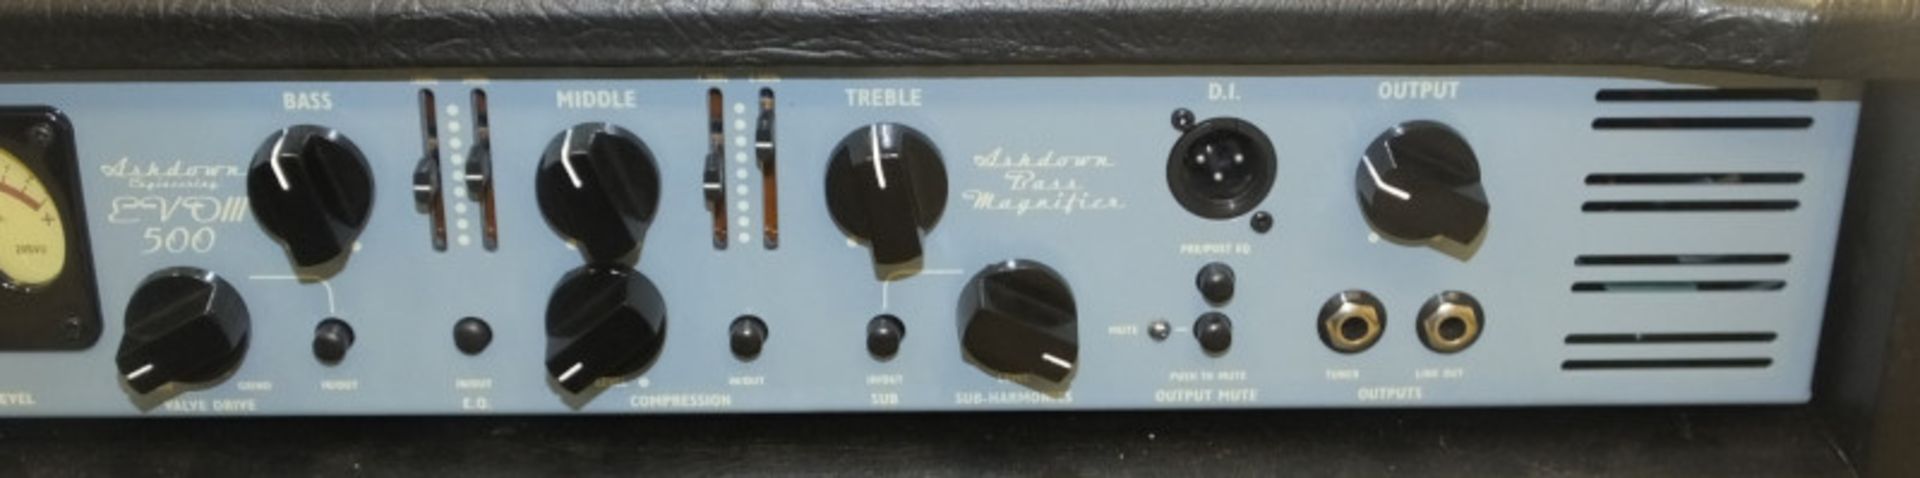 Ashdown EVOIII500 Combo Bass Amplifier - Image 4 of 10